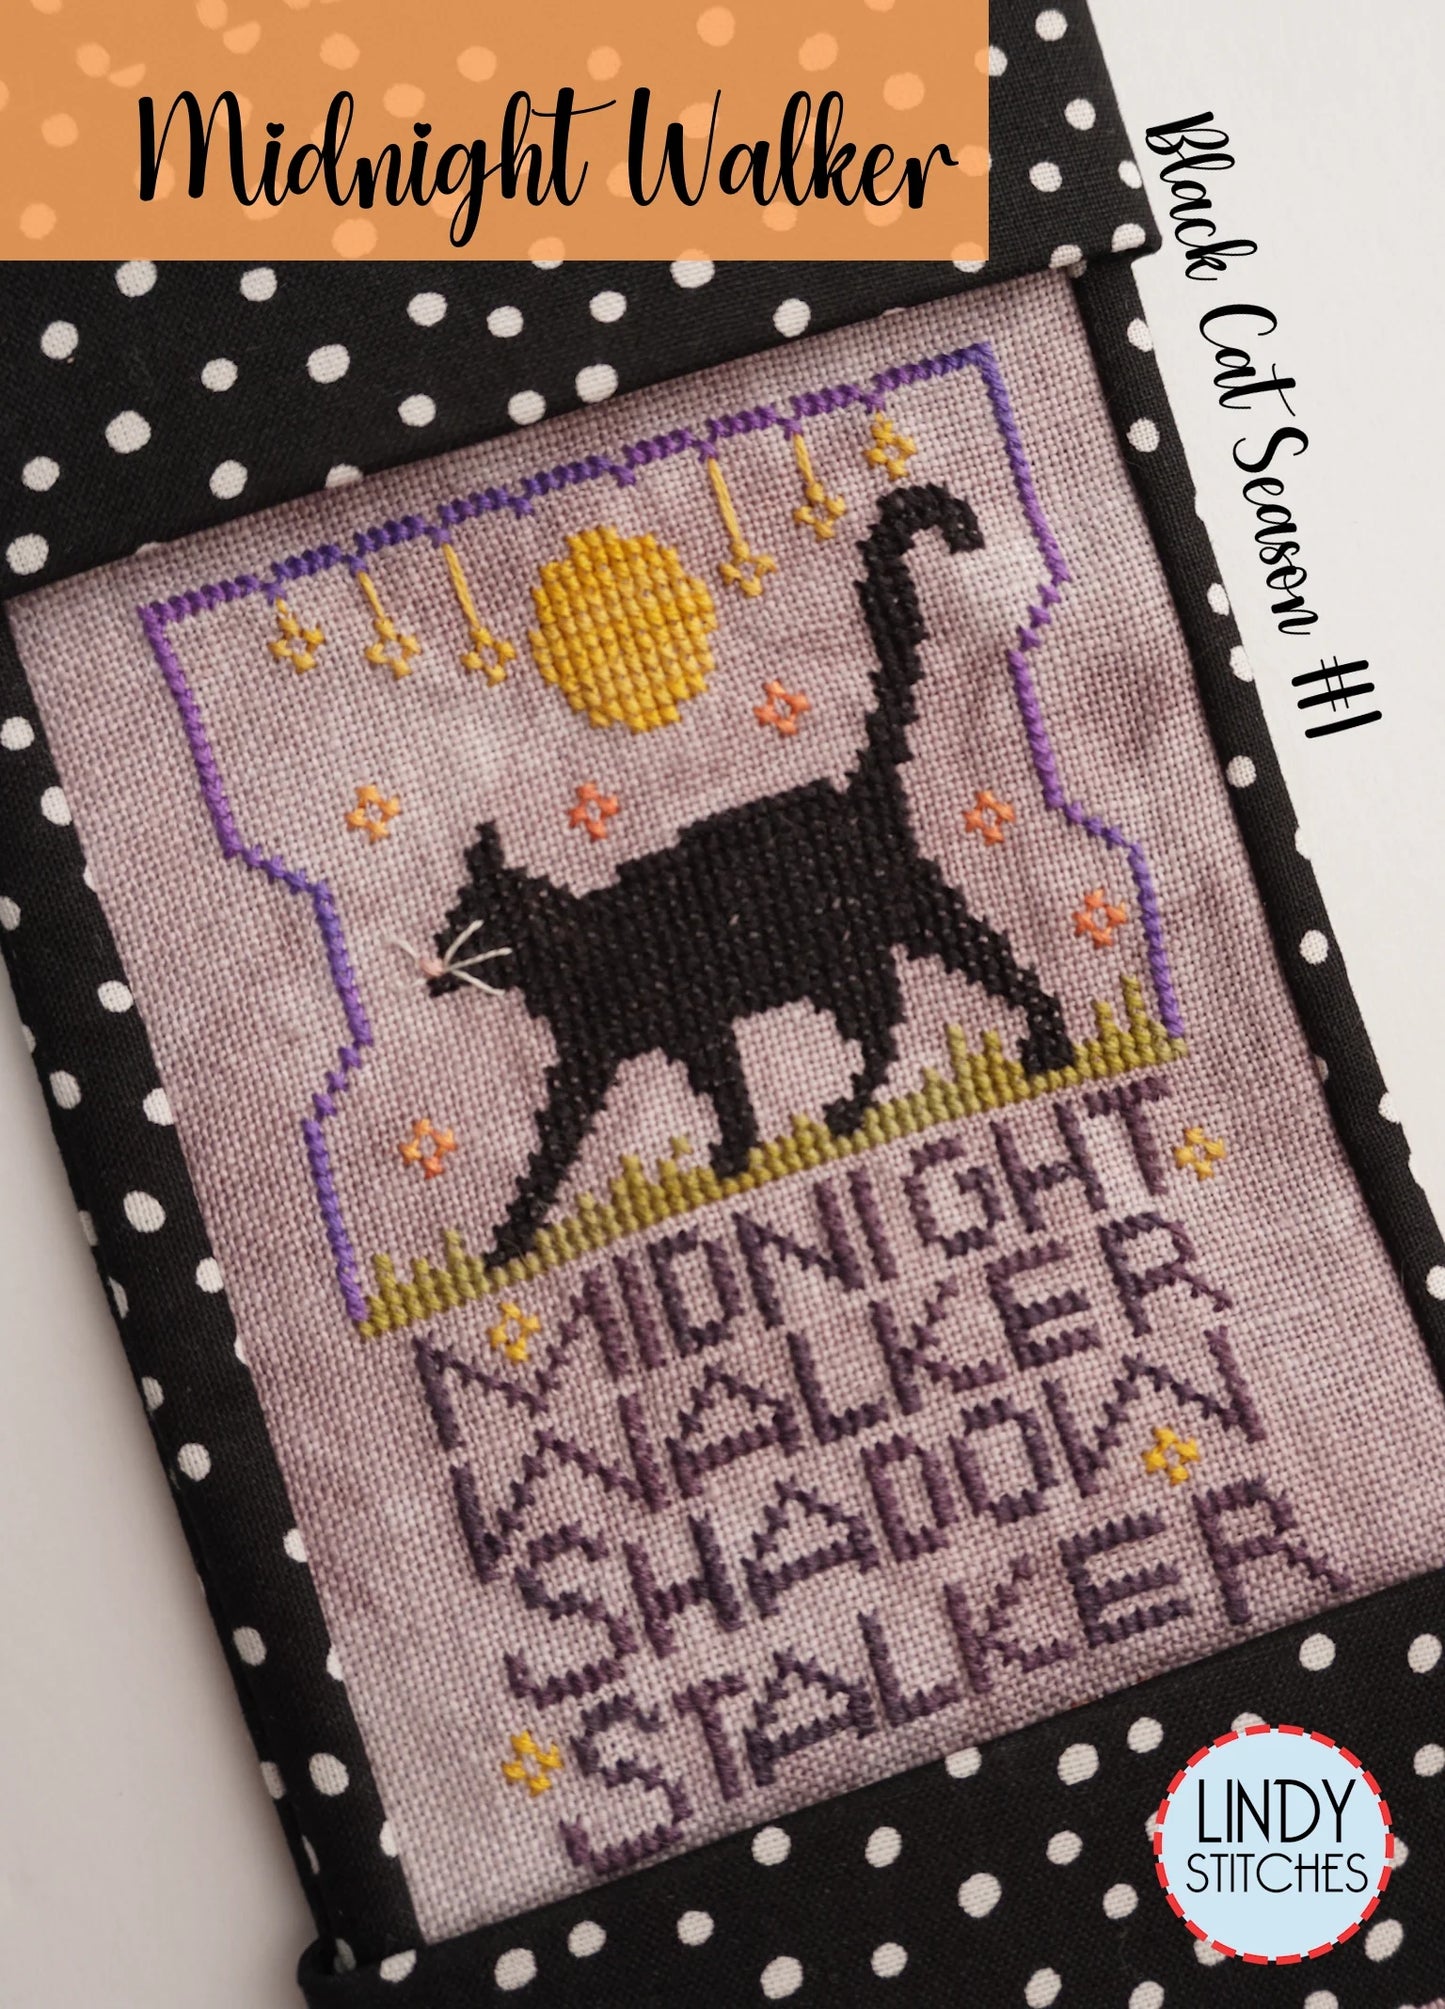 FULL SERIES! Black Cat Season Cross Stitch Patterns by Lindy Stitches